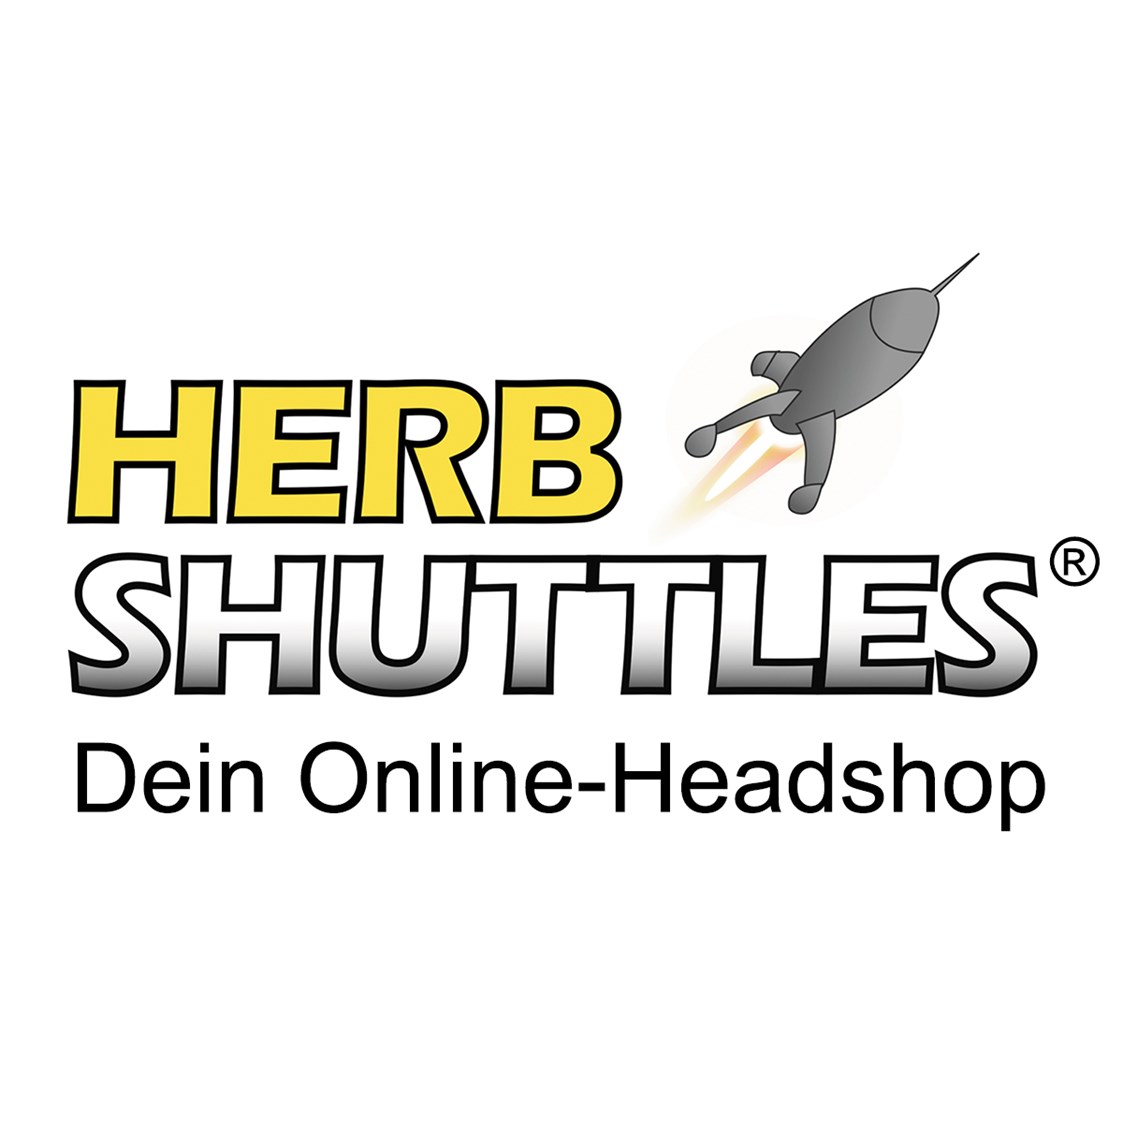 CBD-Shop: Herb Shuttles Online-Headshop